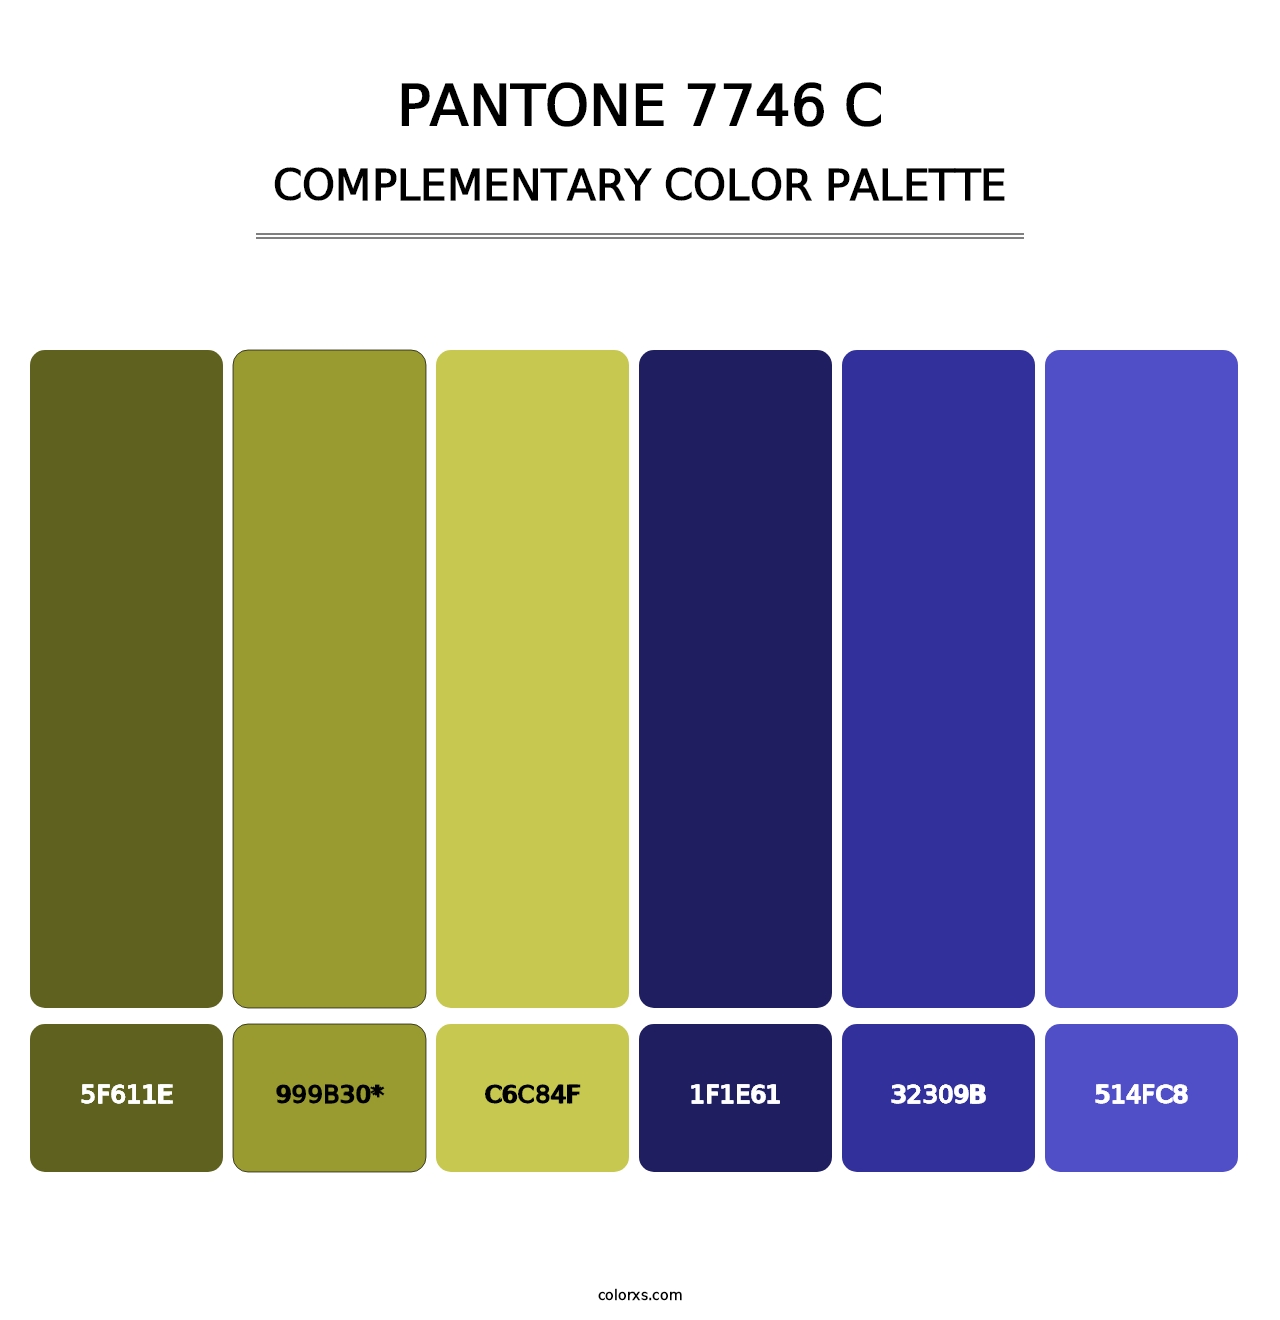 PANTONE 7746 C - Complementary Color Palette